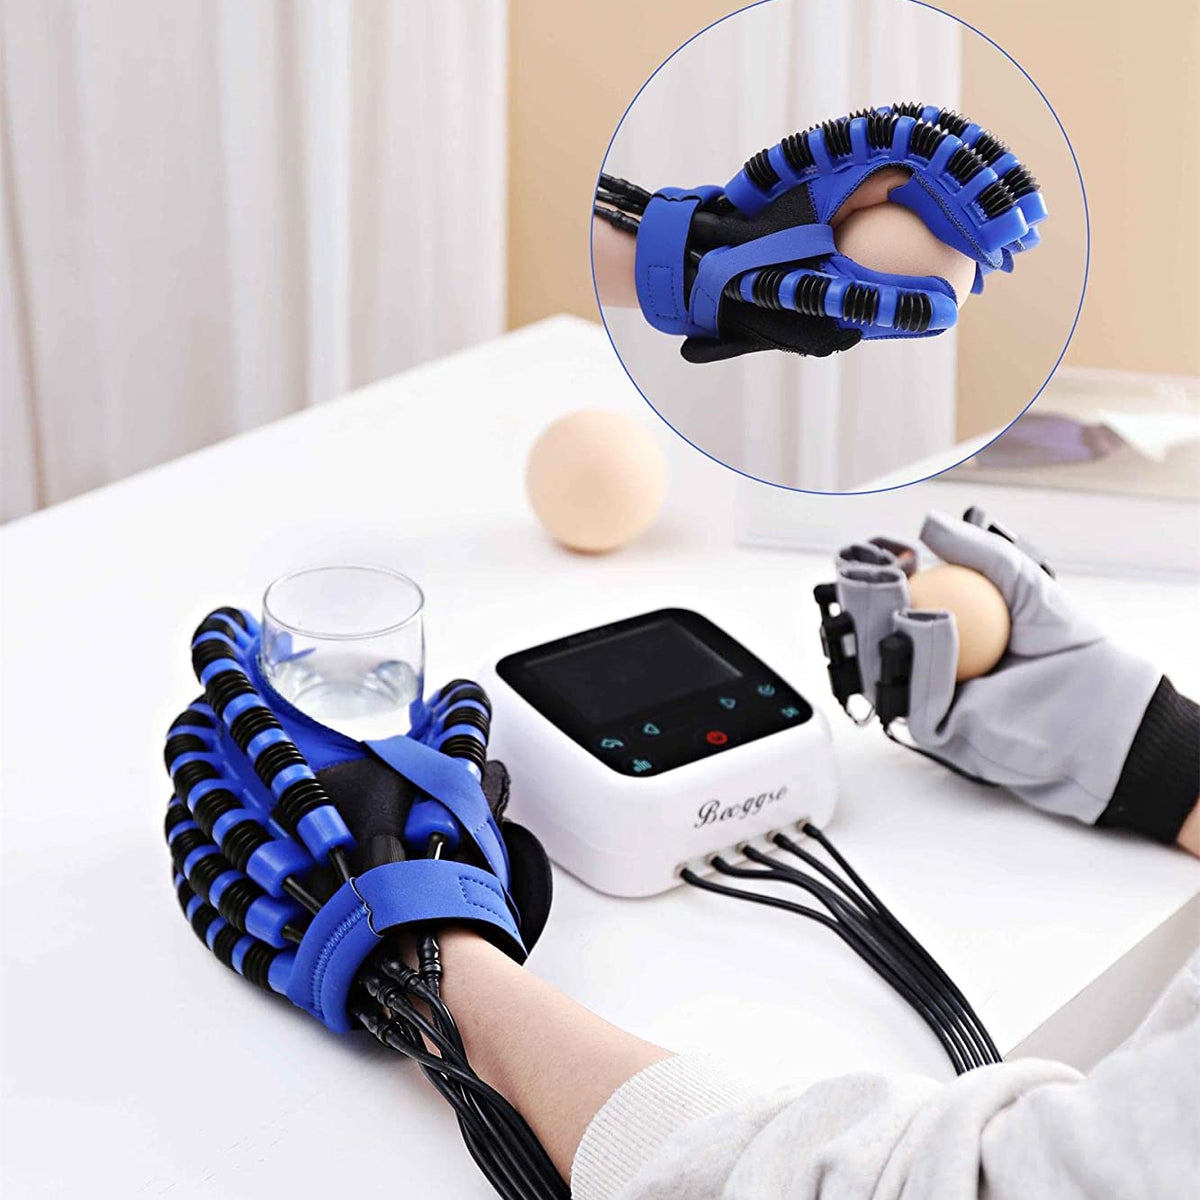 Robotic Rehabilitation Exoskeleton Glove for Stroke and TBI